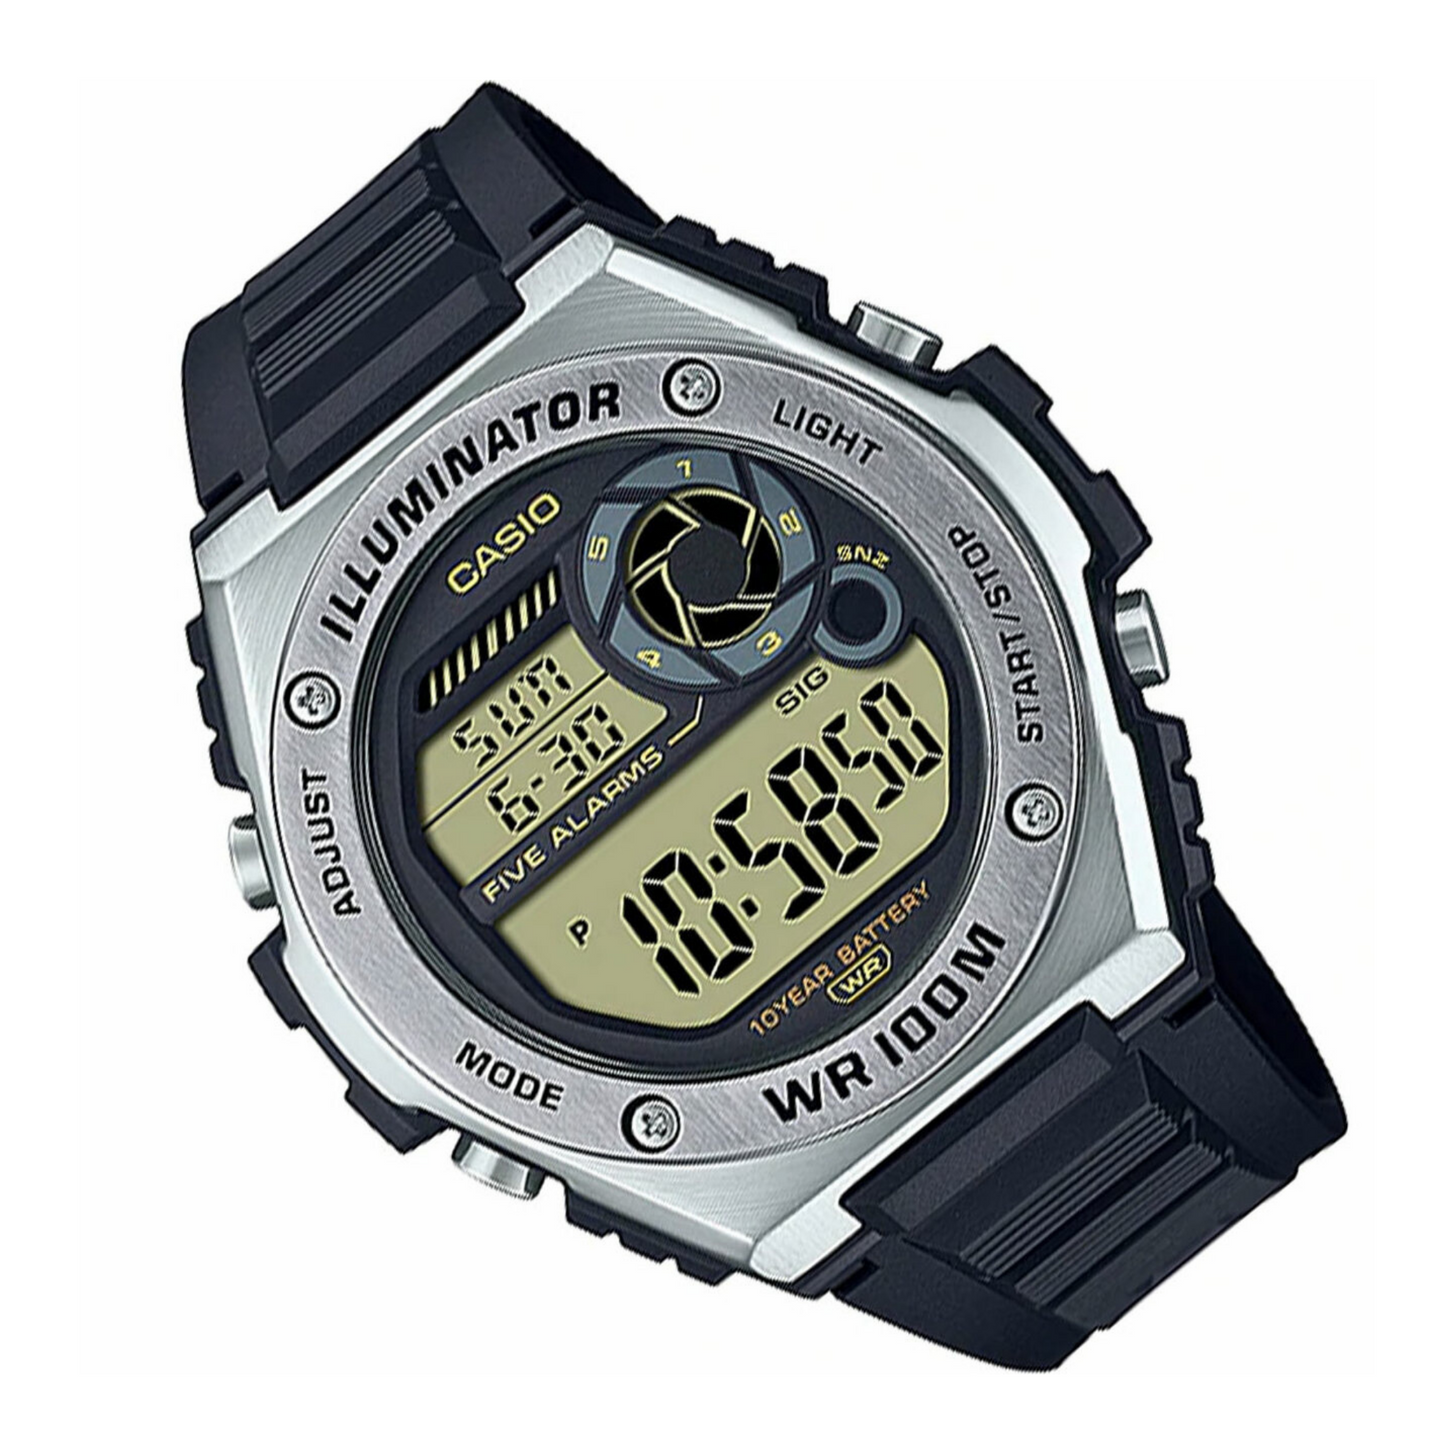 Reloj Casio hombre Modelo MWD-100H-1AV